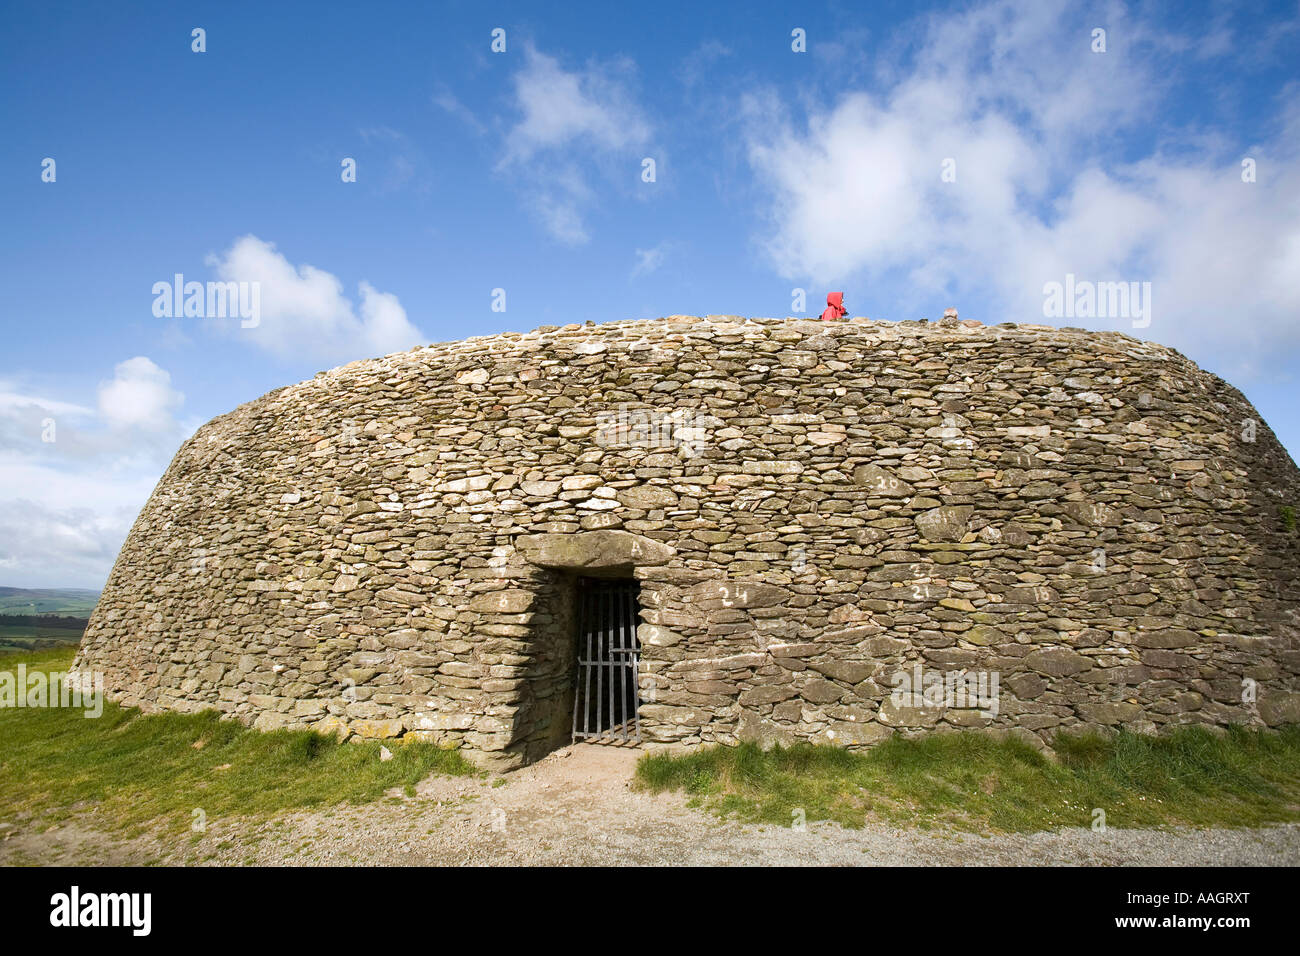 Ireland County Donegal Inishowen Peninsula Burt Grianan an Aileach stone palace of the sun cashel Stock Photo